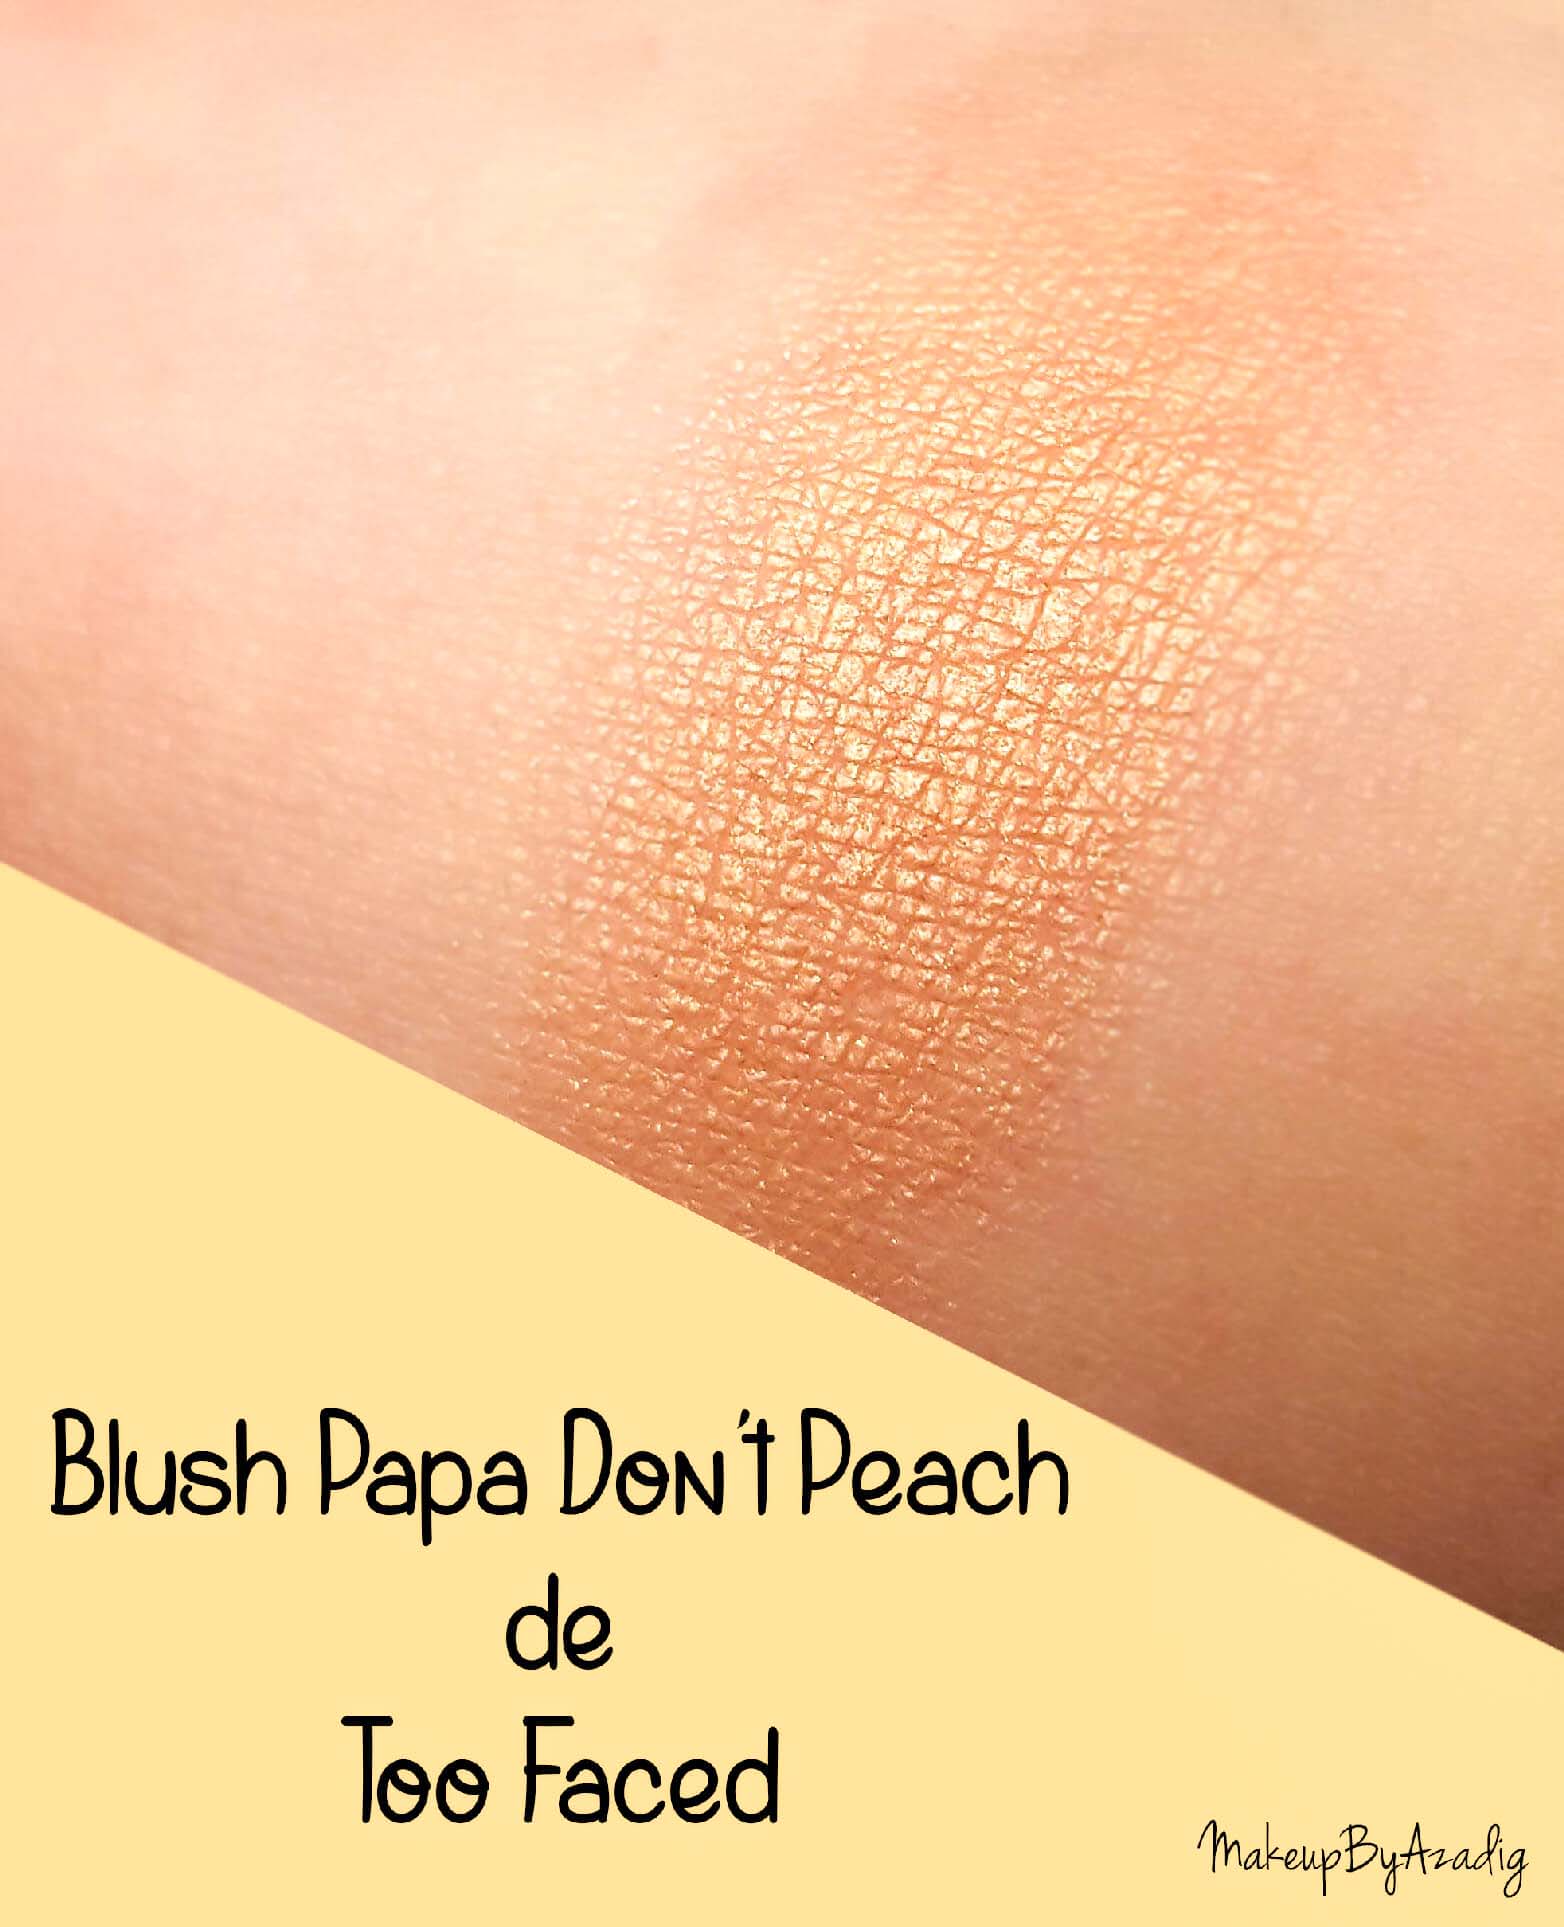 nouveau-blush-papa-dont-peach-too-faced-sephora-ete-printemps-paris-sweet-peach-swatch-avis-makeupbyazadig-swatches - copie-2